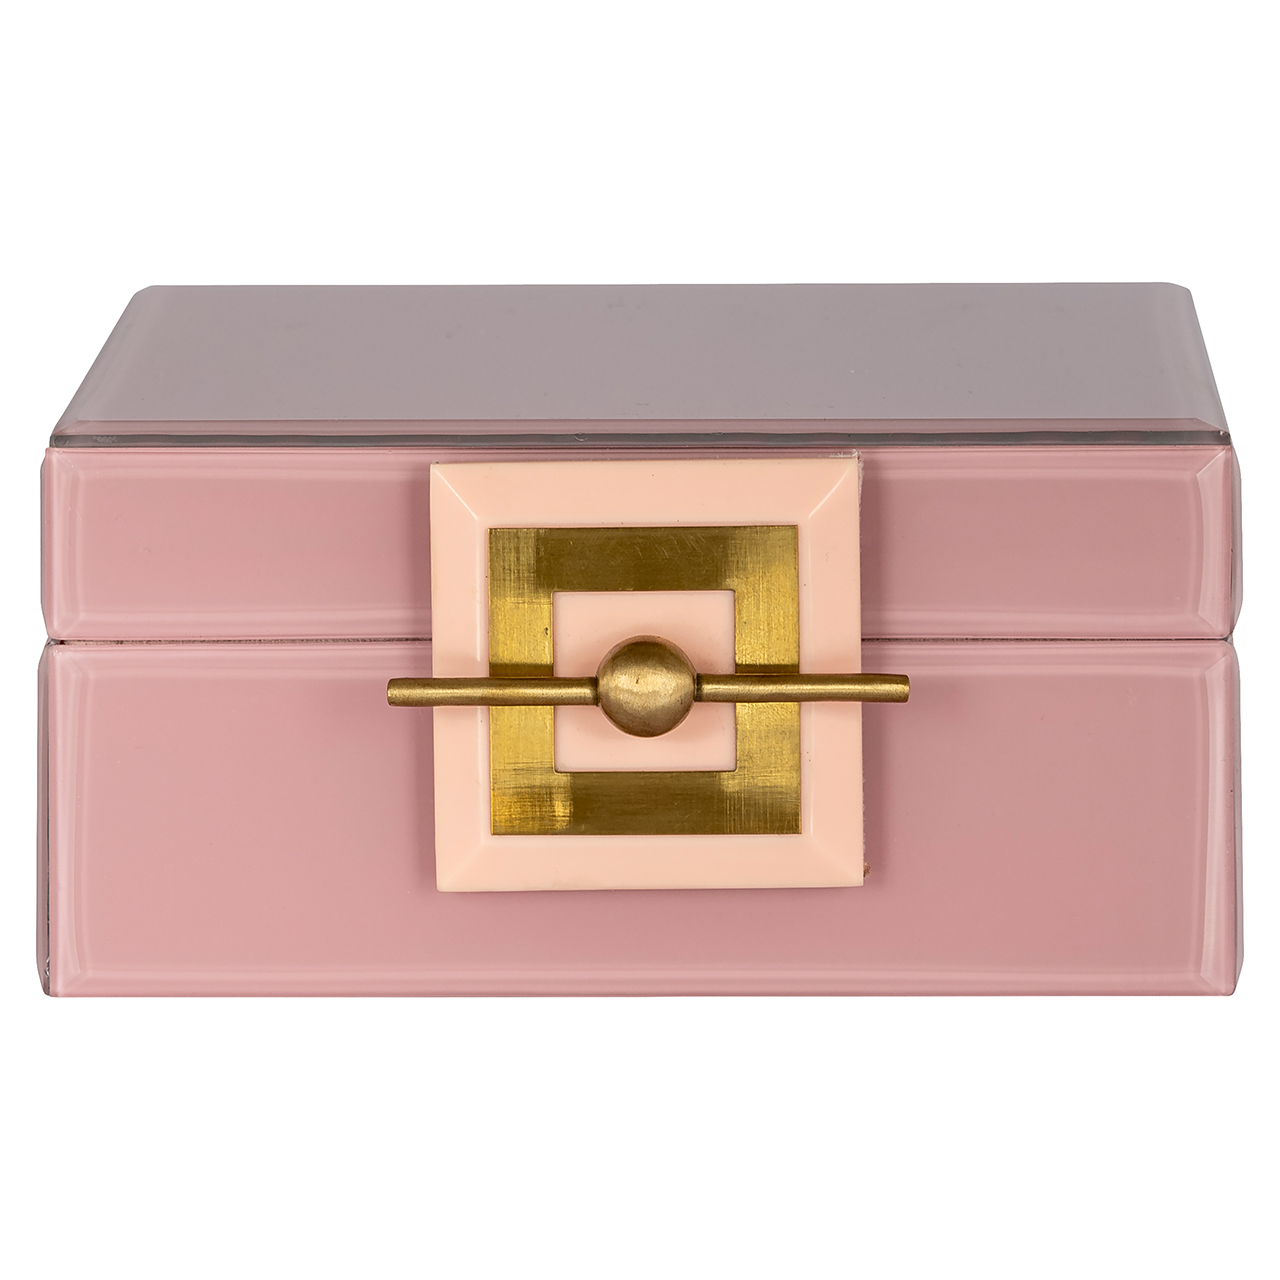 Juwelen box Bodine roze klein